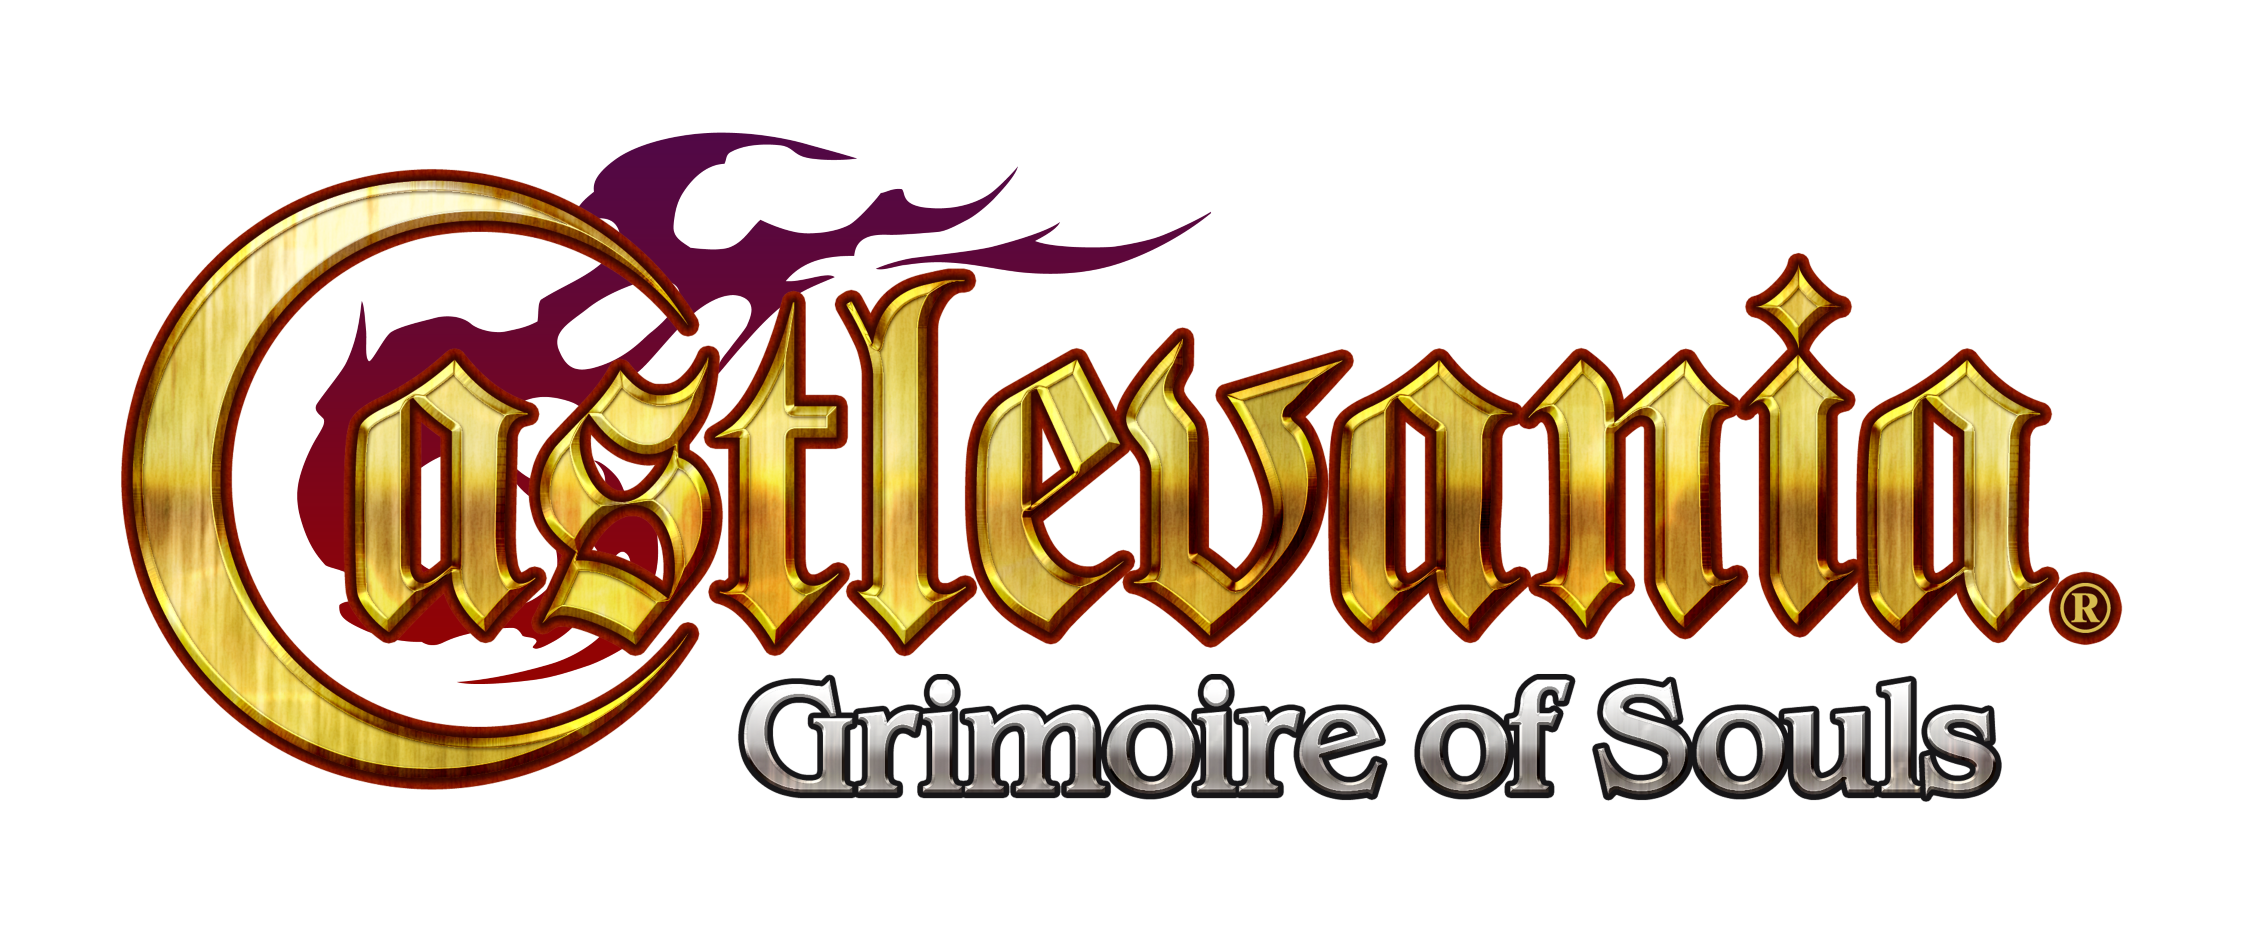 Castelvania: Grimoire Of Souls presto disponibile su Apple Arcade